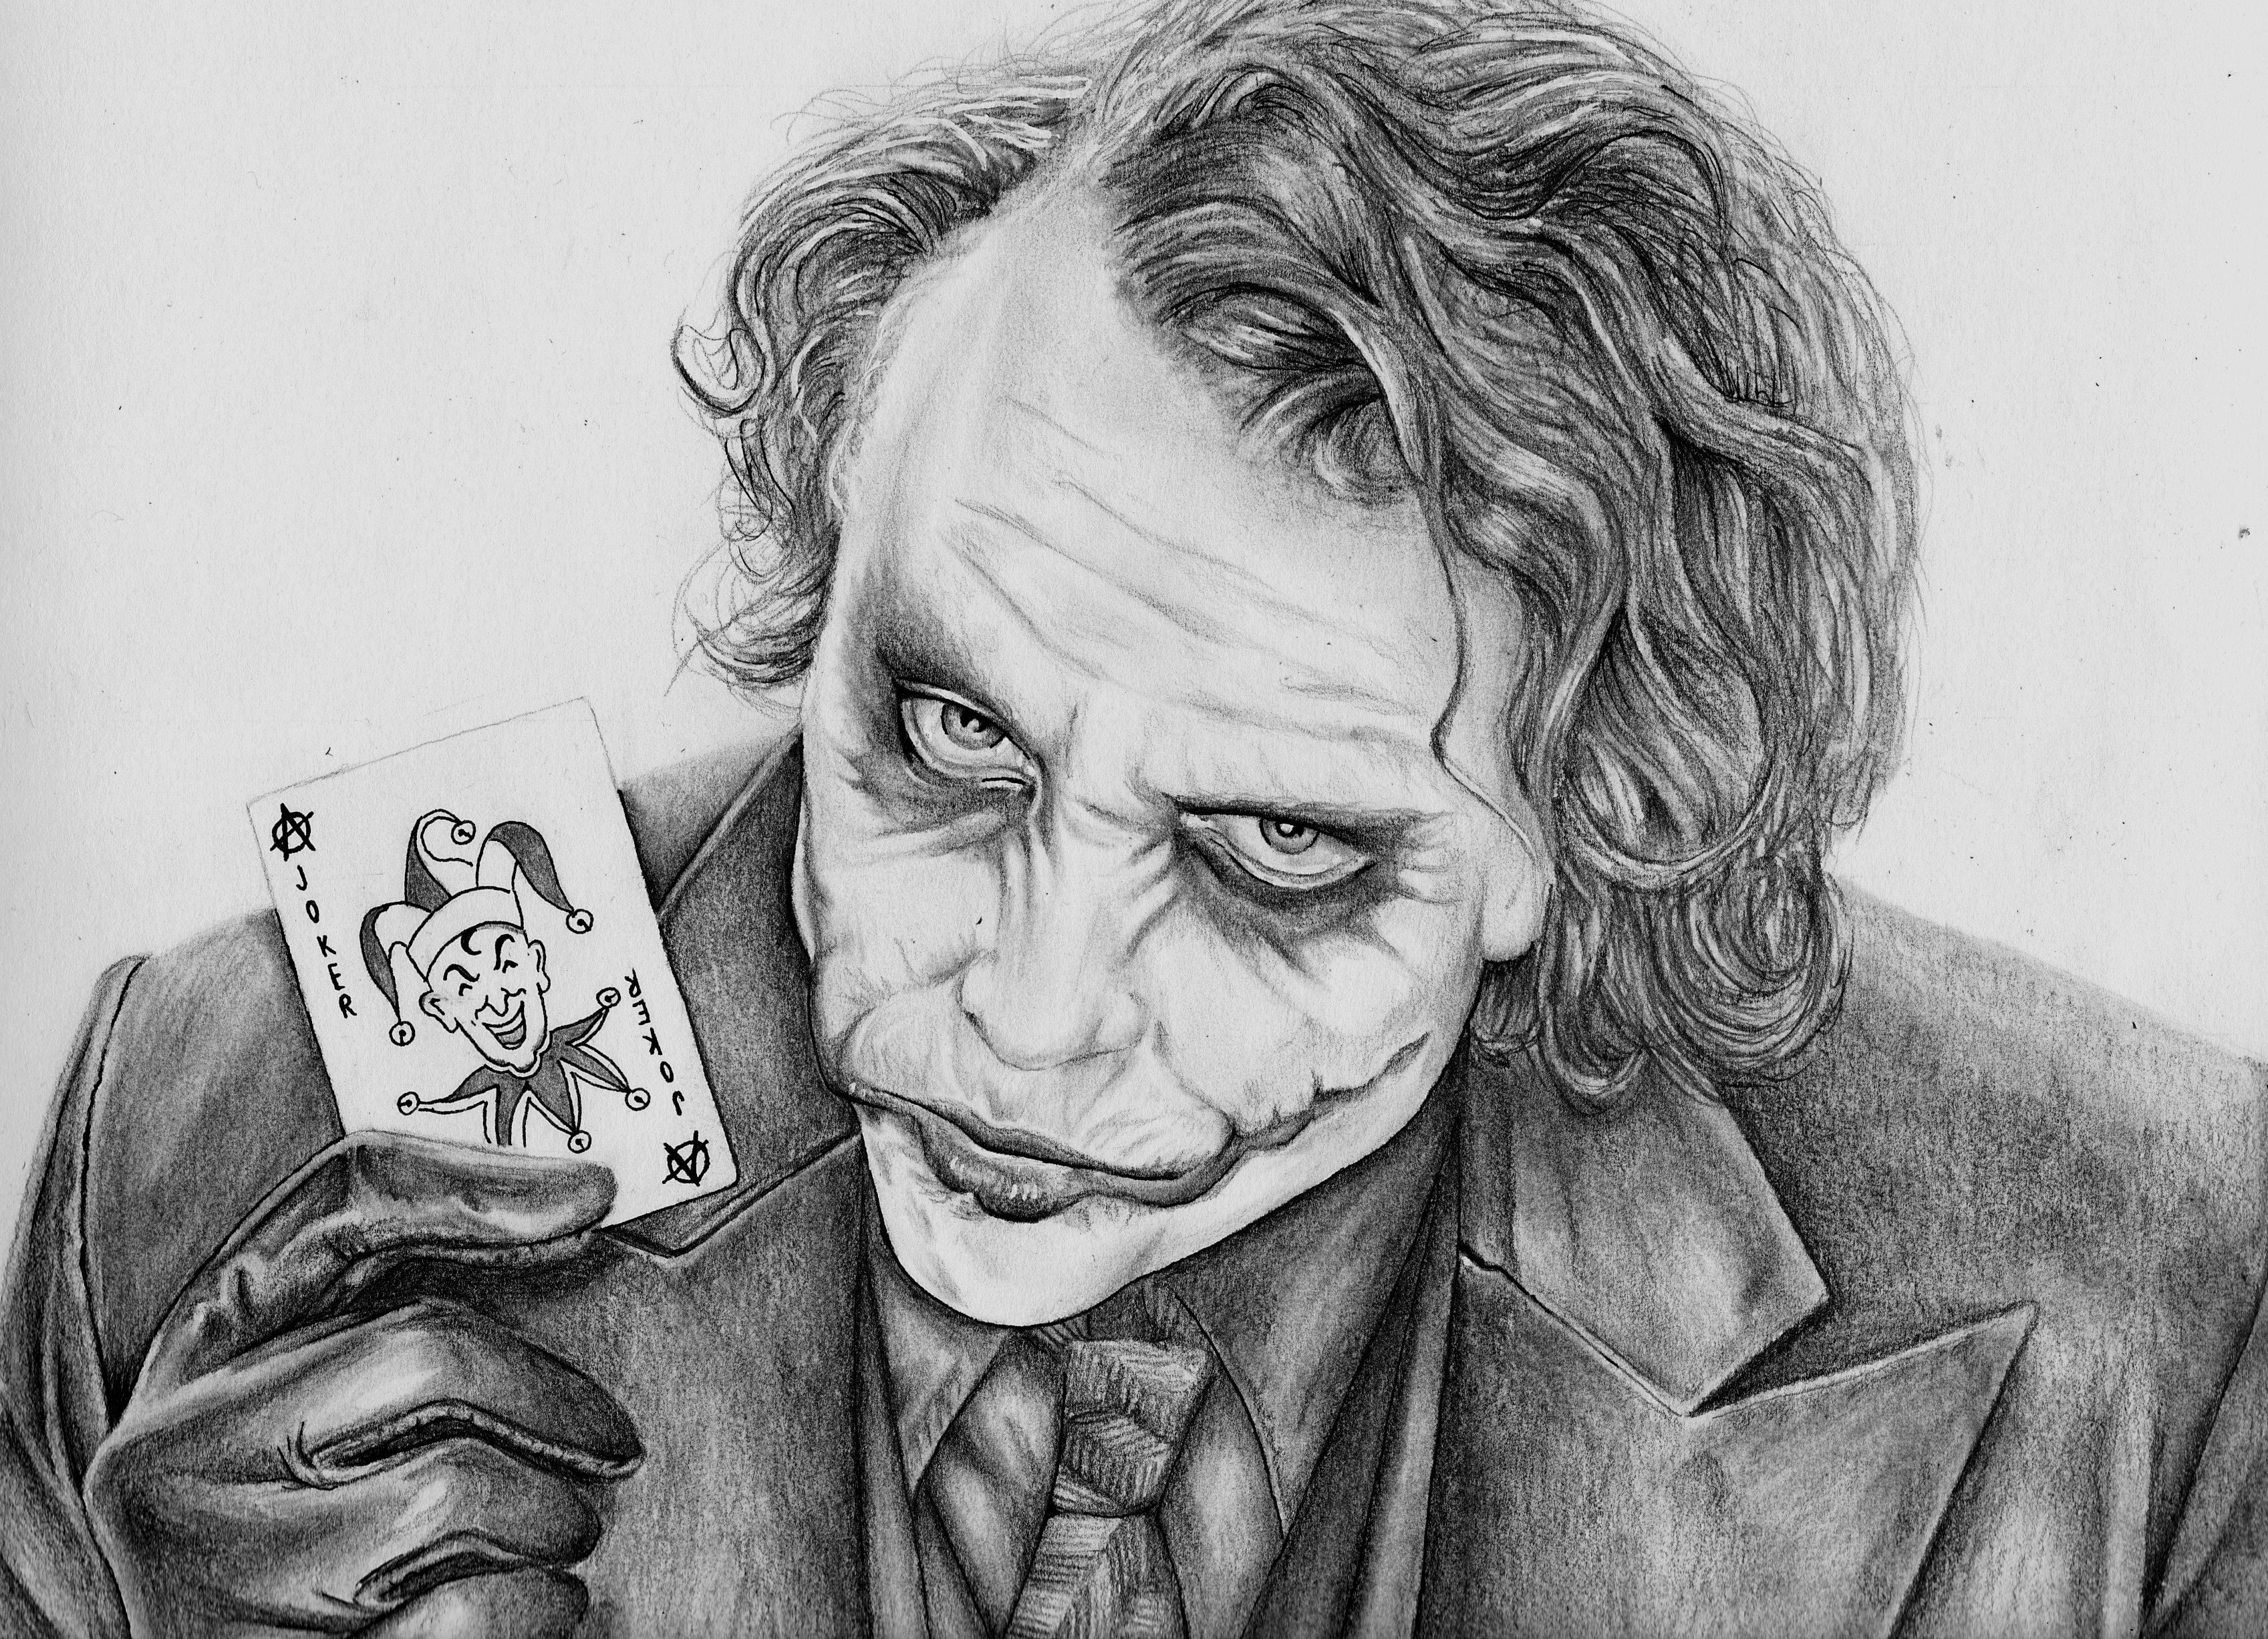 Heath Ledger Joker by meralc on DeviantArt